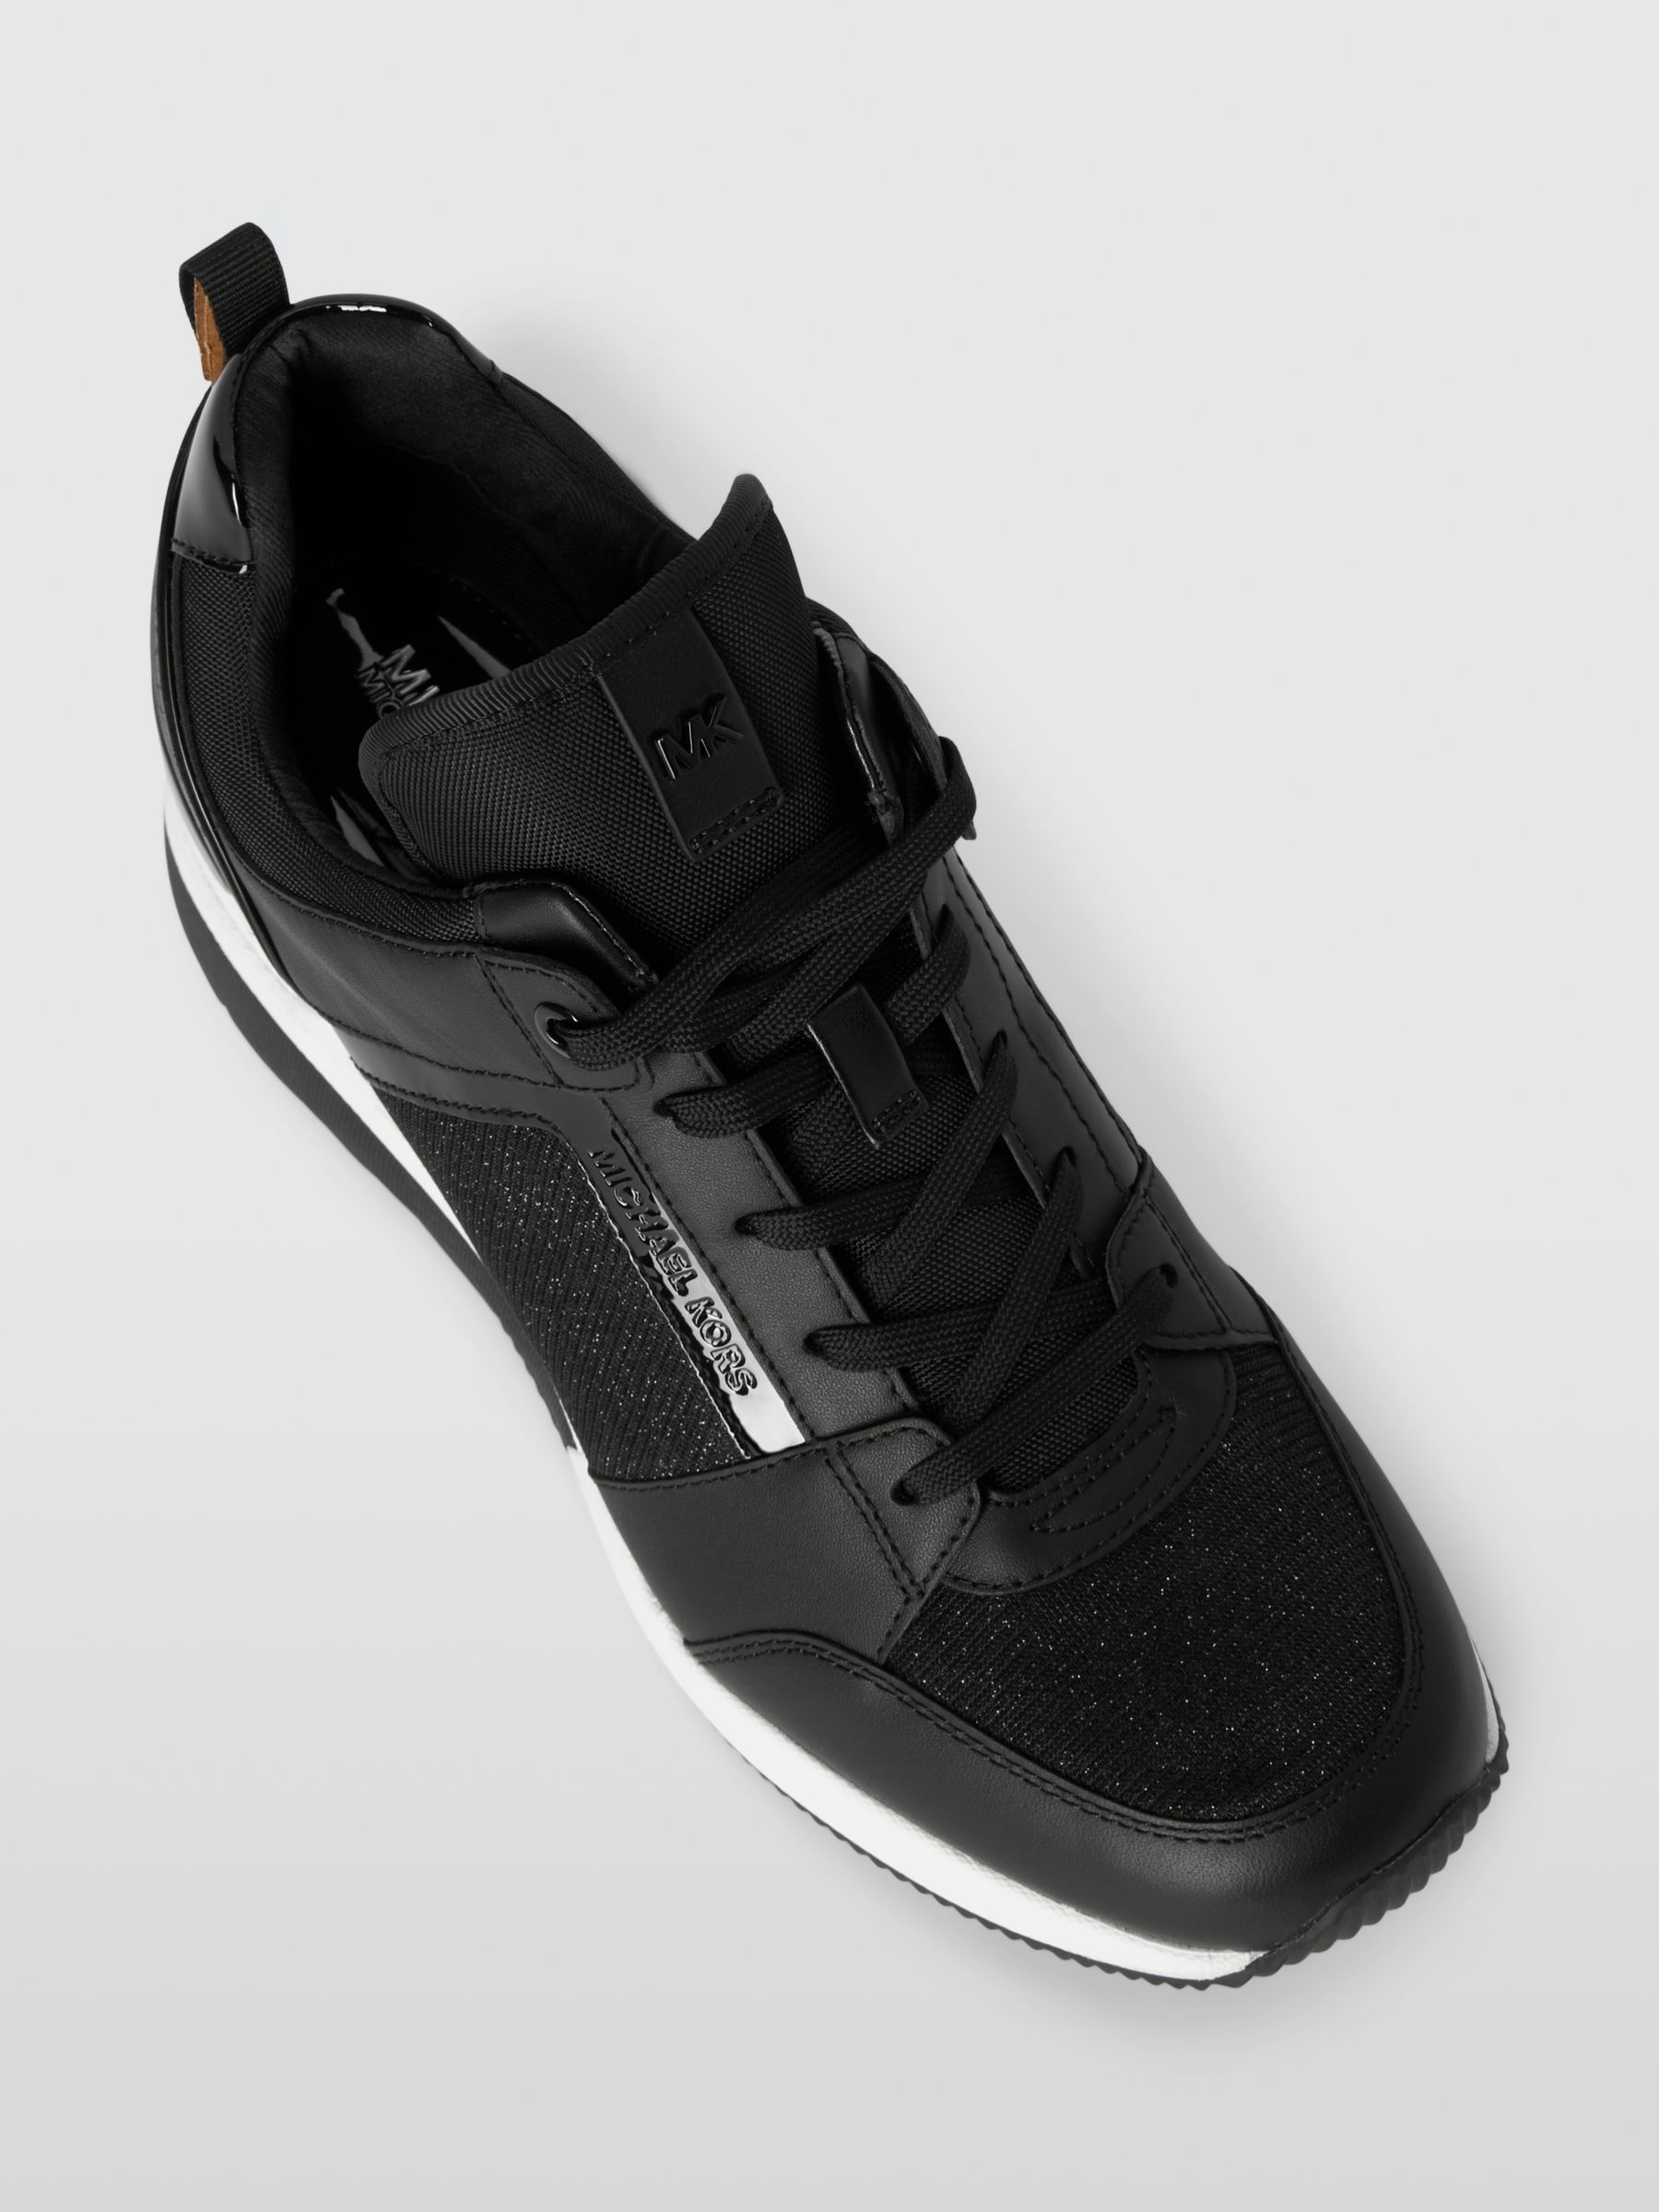 Michael Kors Georgie Leather Wedge Heel Trainers, Black, 4